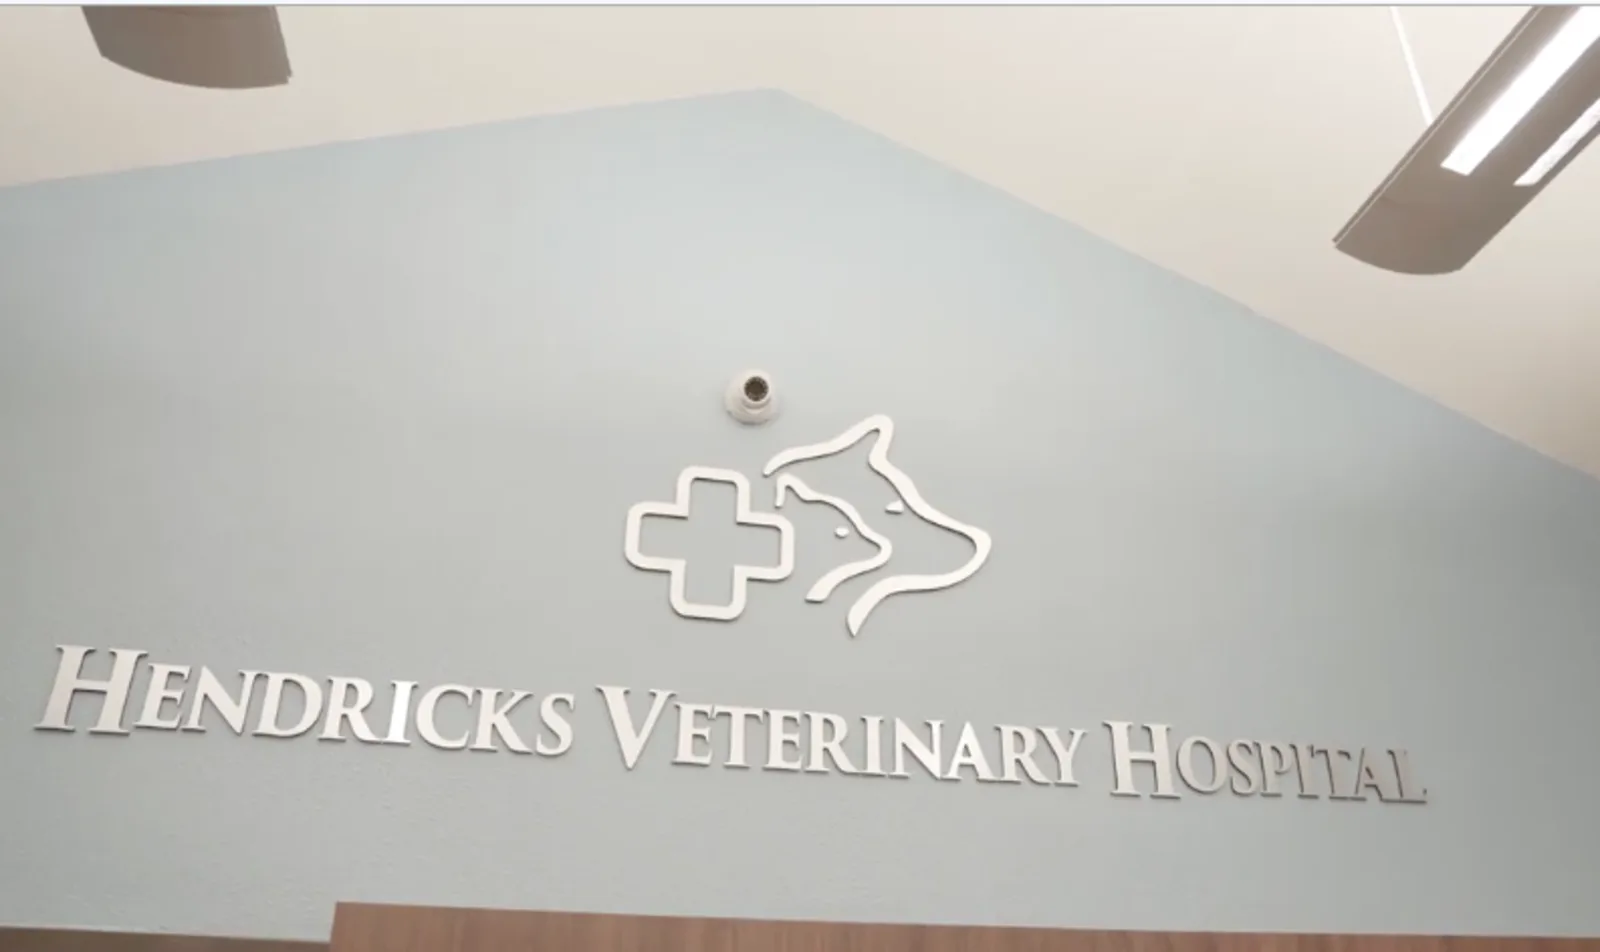 Hendricks Veterinary Hospital